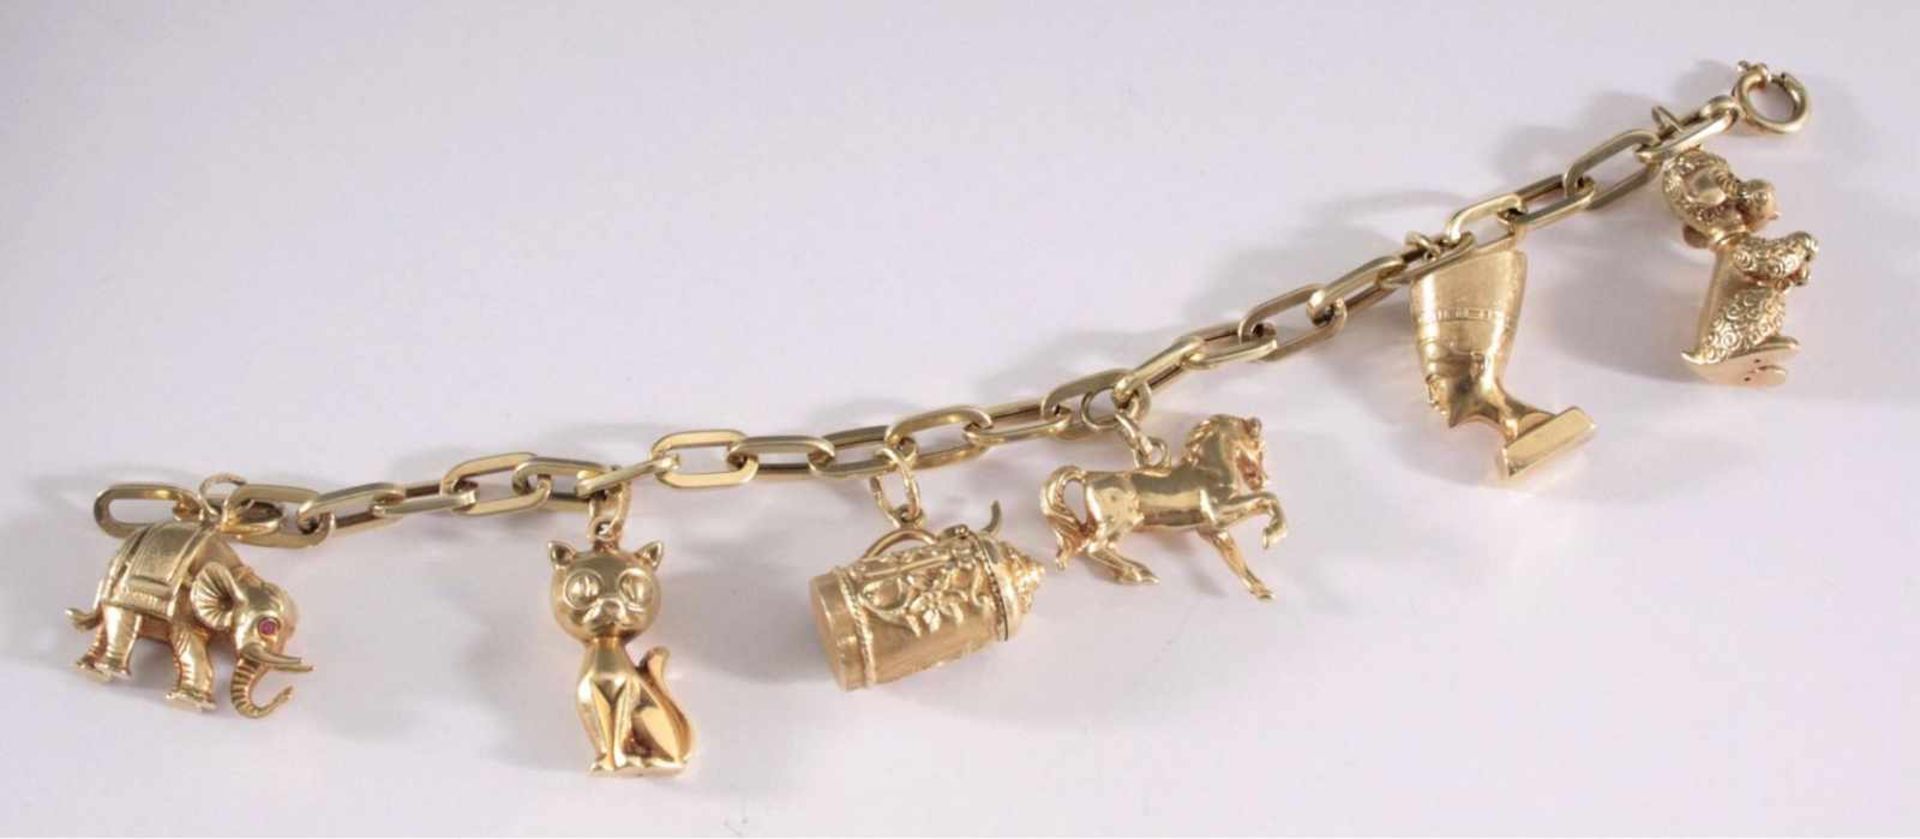 Bettelarmband aus 14 Karat GelbgoldKettenglieder-Armband mit 6 Anhänger u.a. Pudel, Elefant, - Image 2 of 2